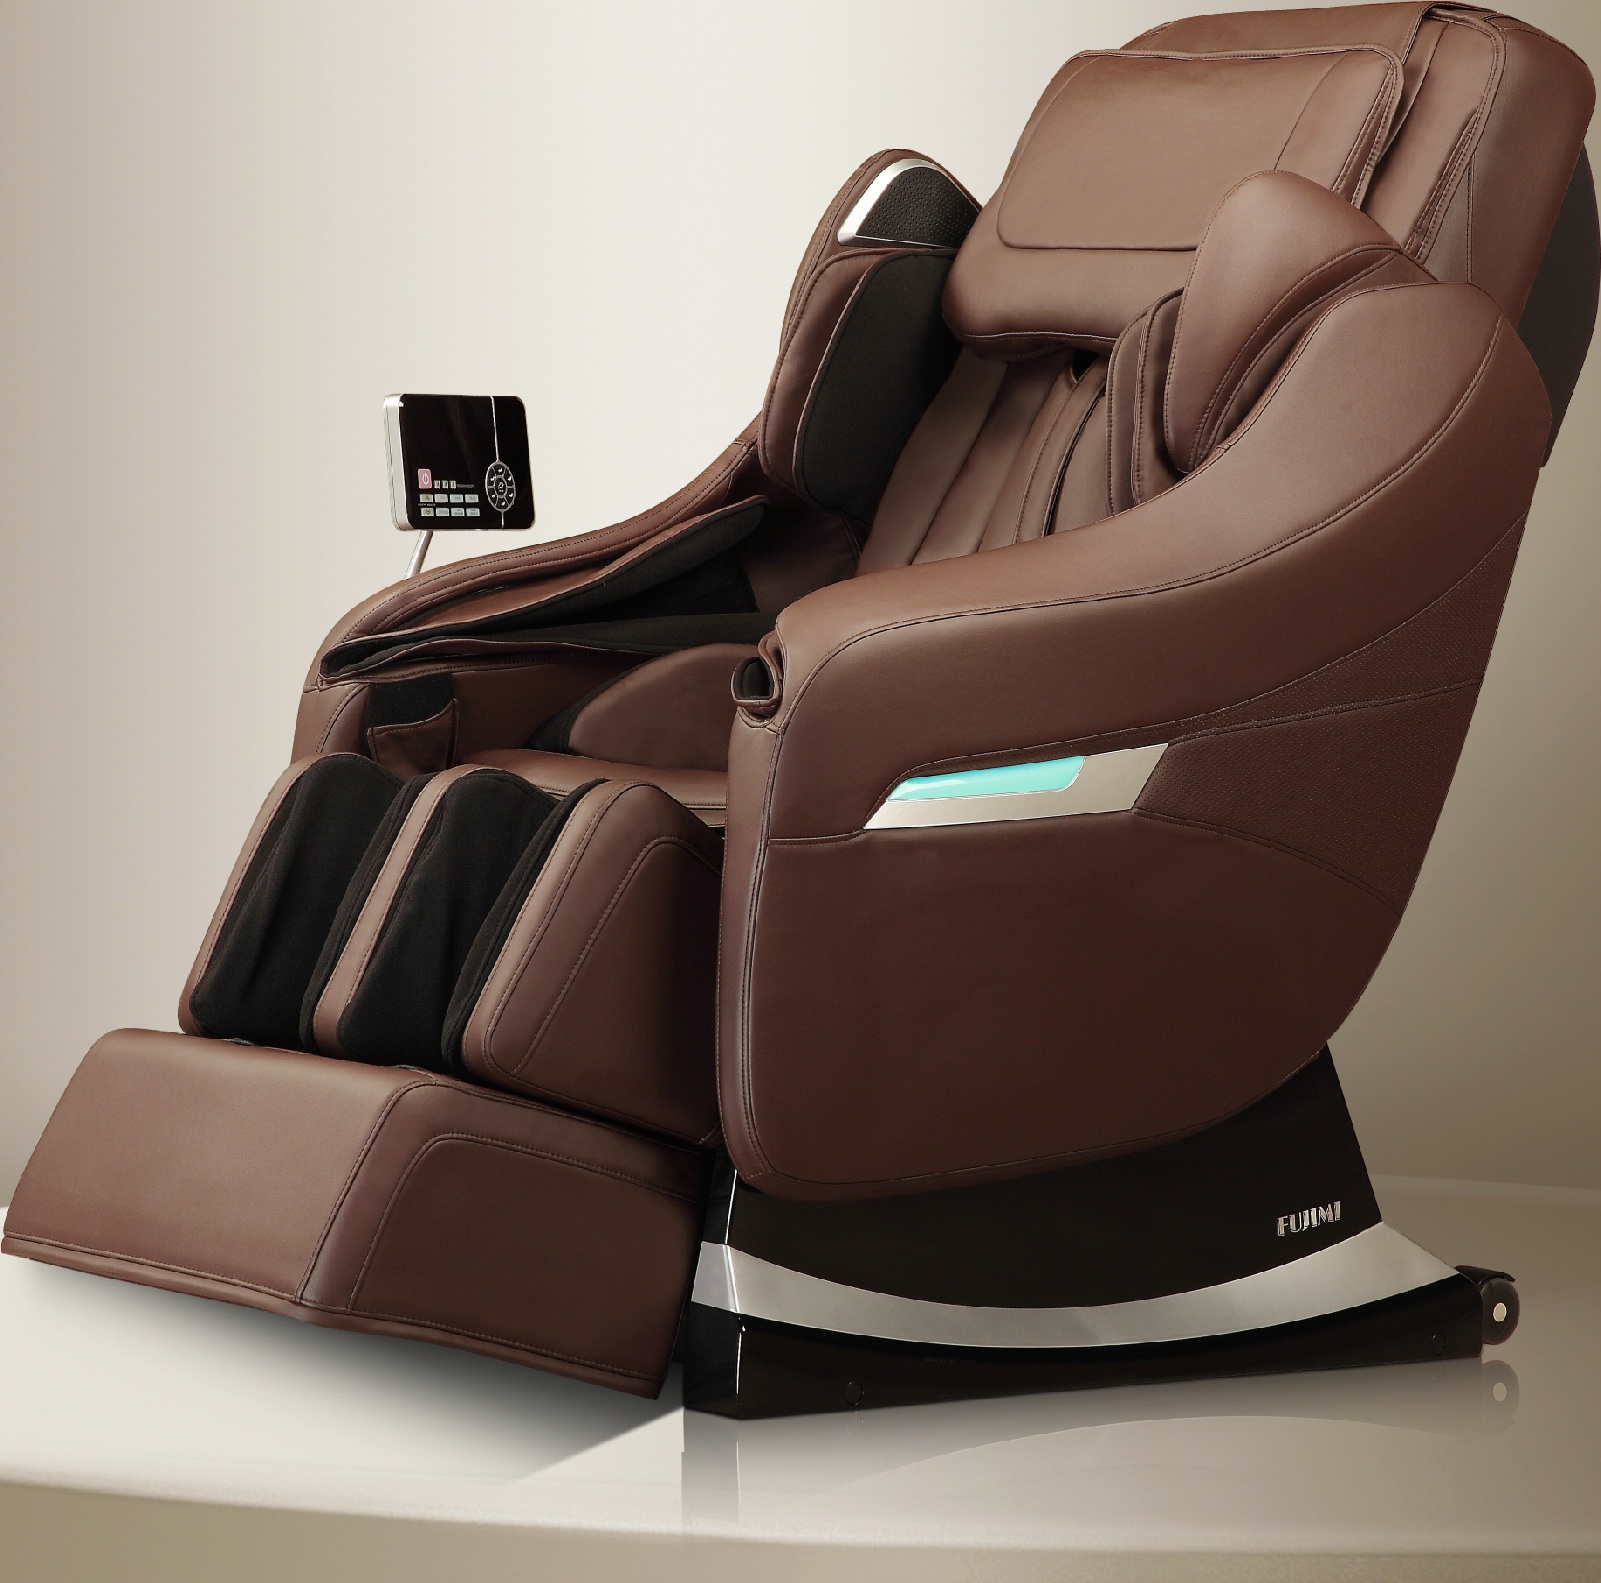 Fujimi Luxury Massage Chair By Fujimi